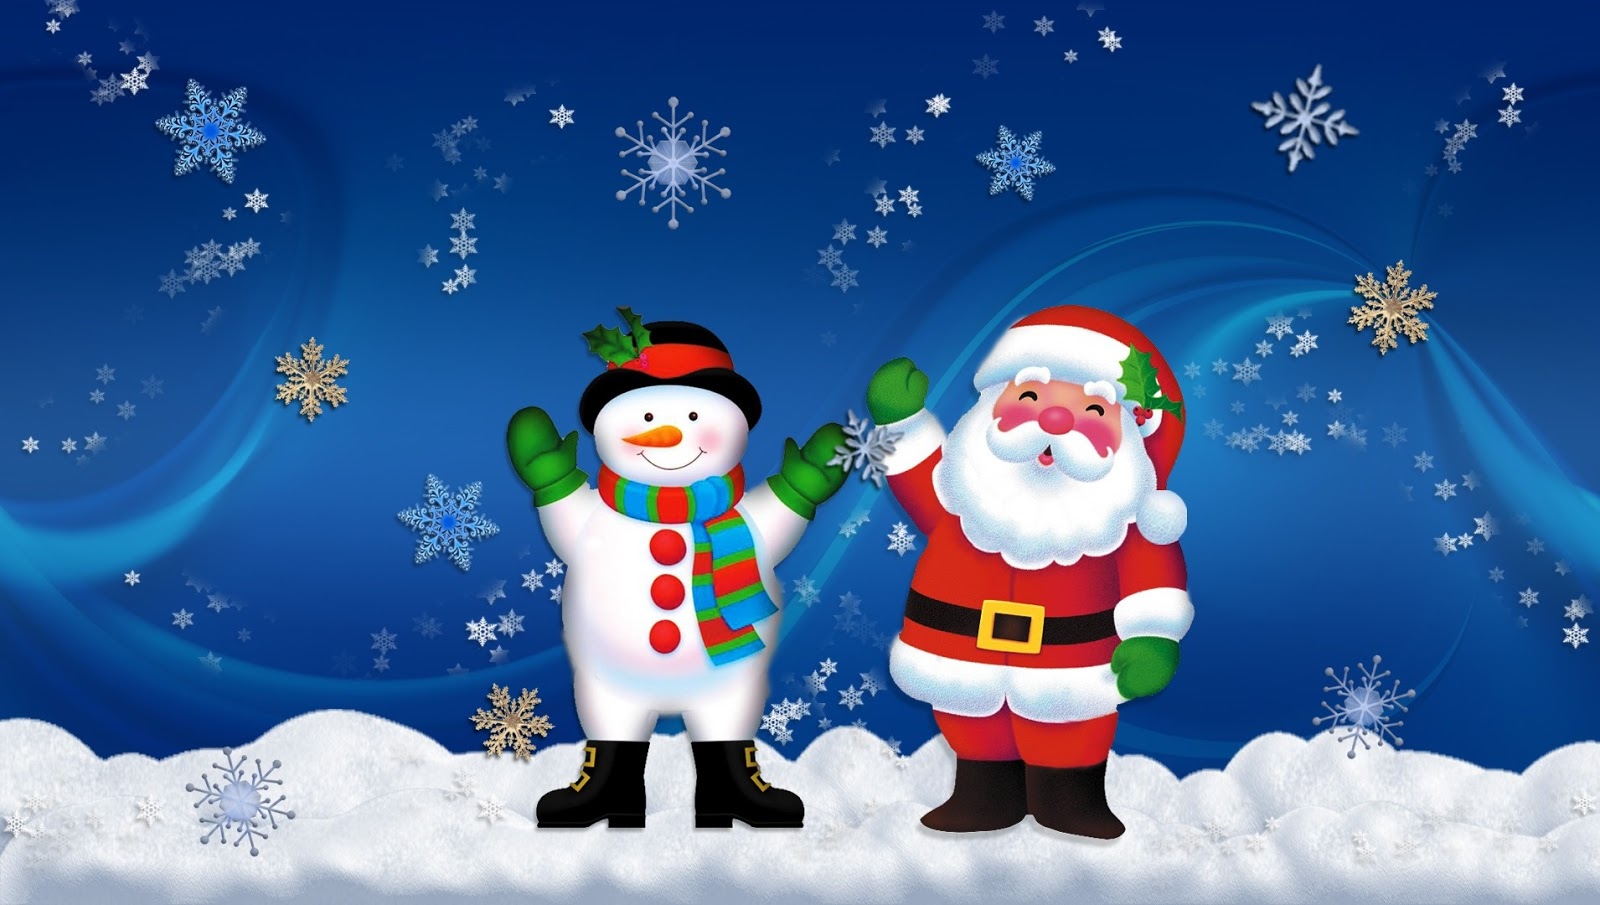 http://2.bp.blogspot.com/-sPr2uoLwzKo/UNX_aqjyT7I/AAAAAAAADGw/vV-erbanJtU/s1600/Christmas+Wallpapers1.jpg